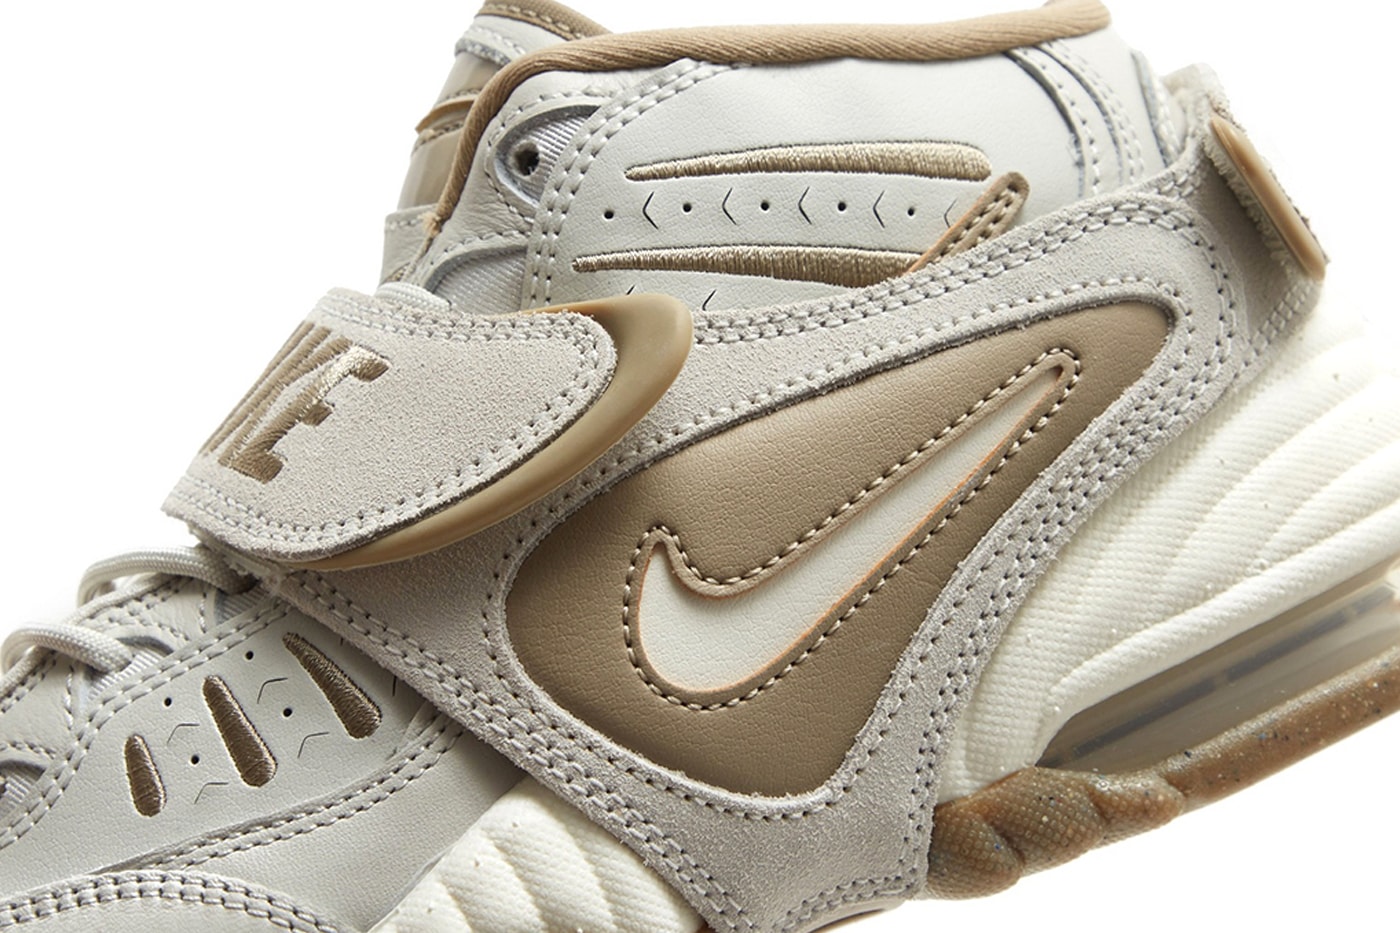 Nike Air Adjust Force Surfaces in "Light Bone/Khaki"  DZ1844-200 Khaki/Light Bone/Gum Medium Brown swoosh sneakers shoes chunky dad shoes velcro strap